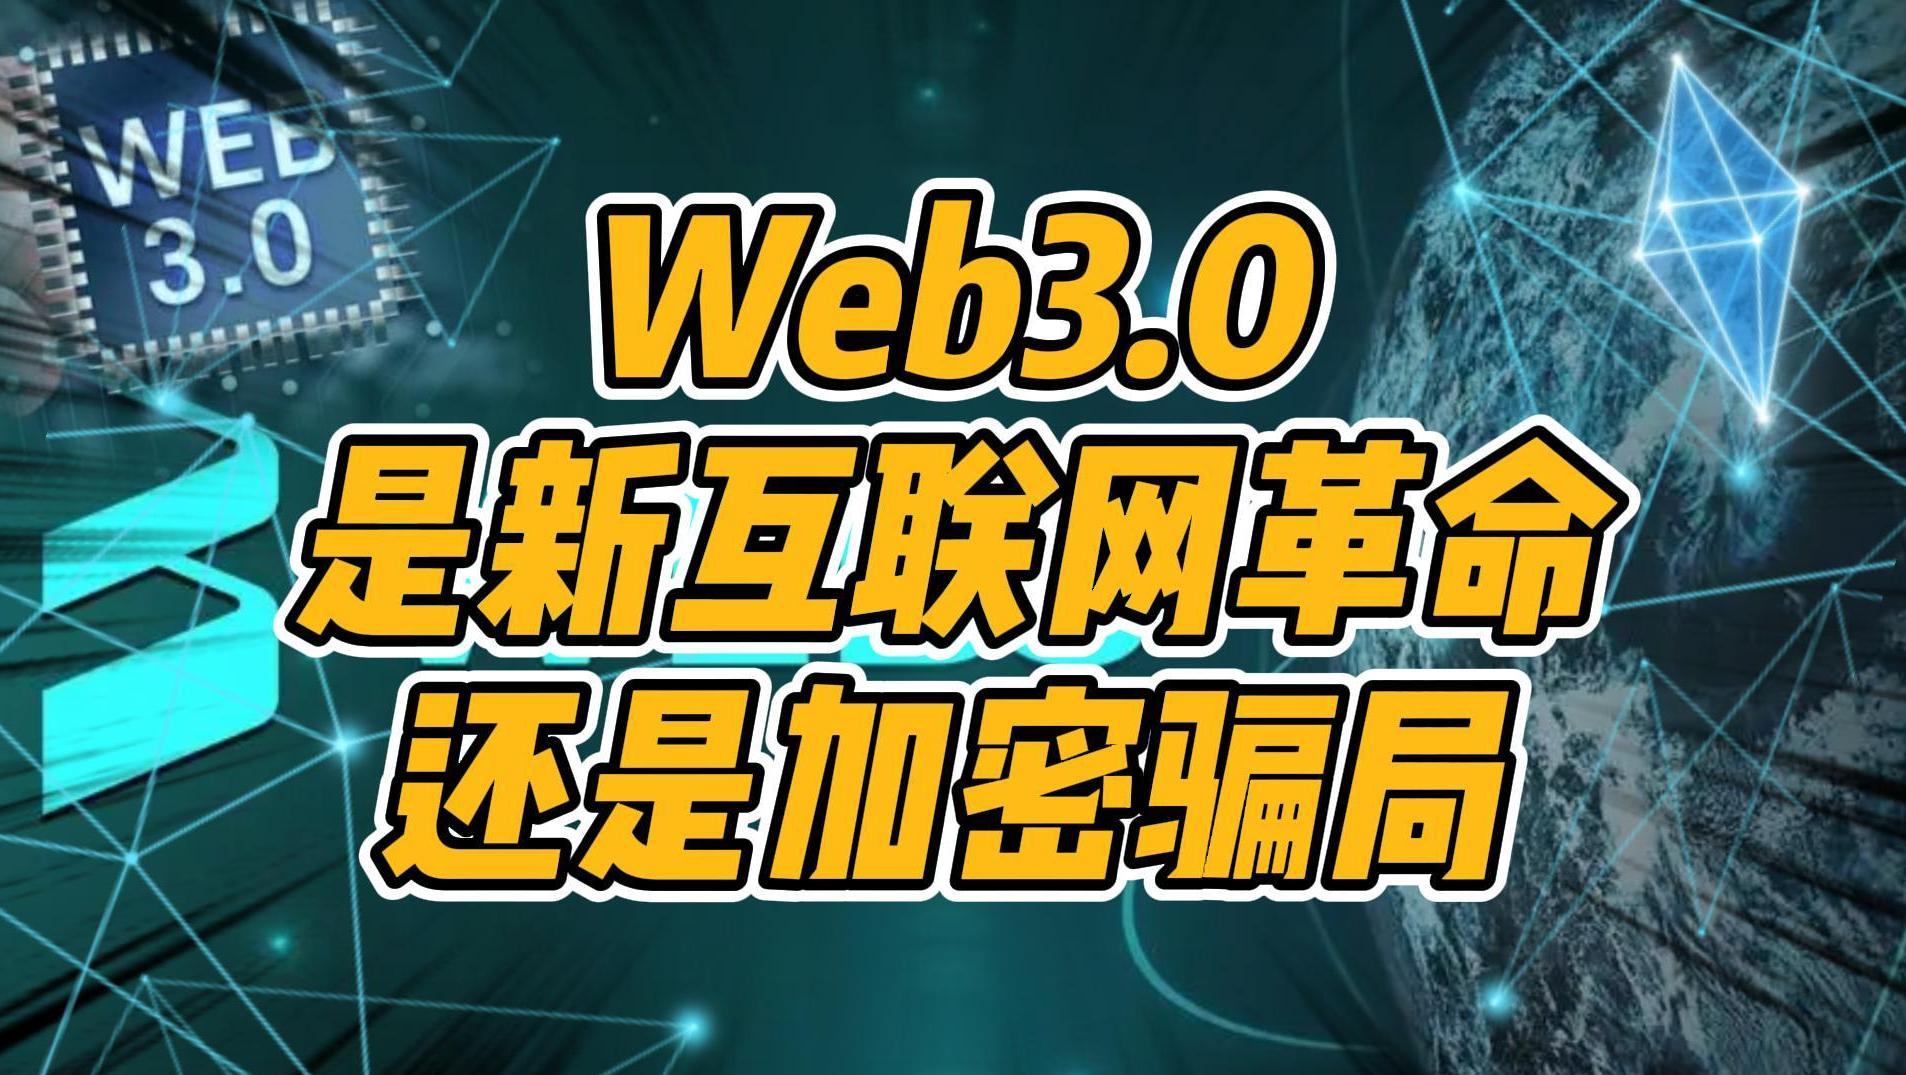 Web3.0是新互联网革命，还是加密骗局？